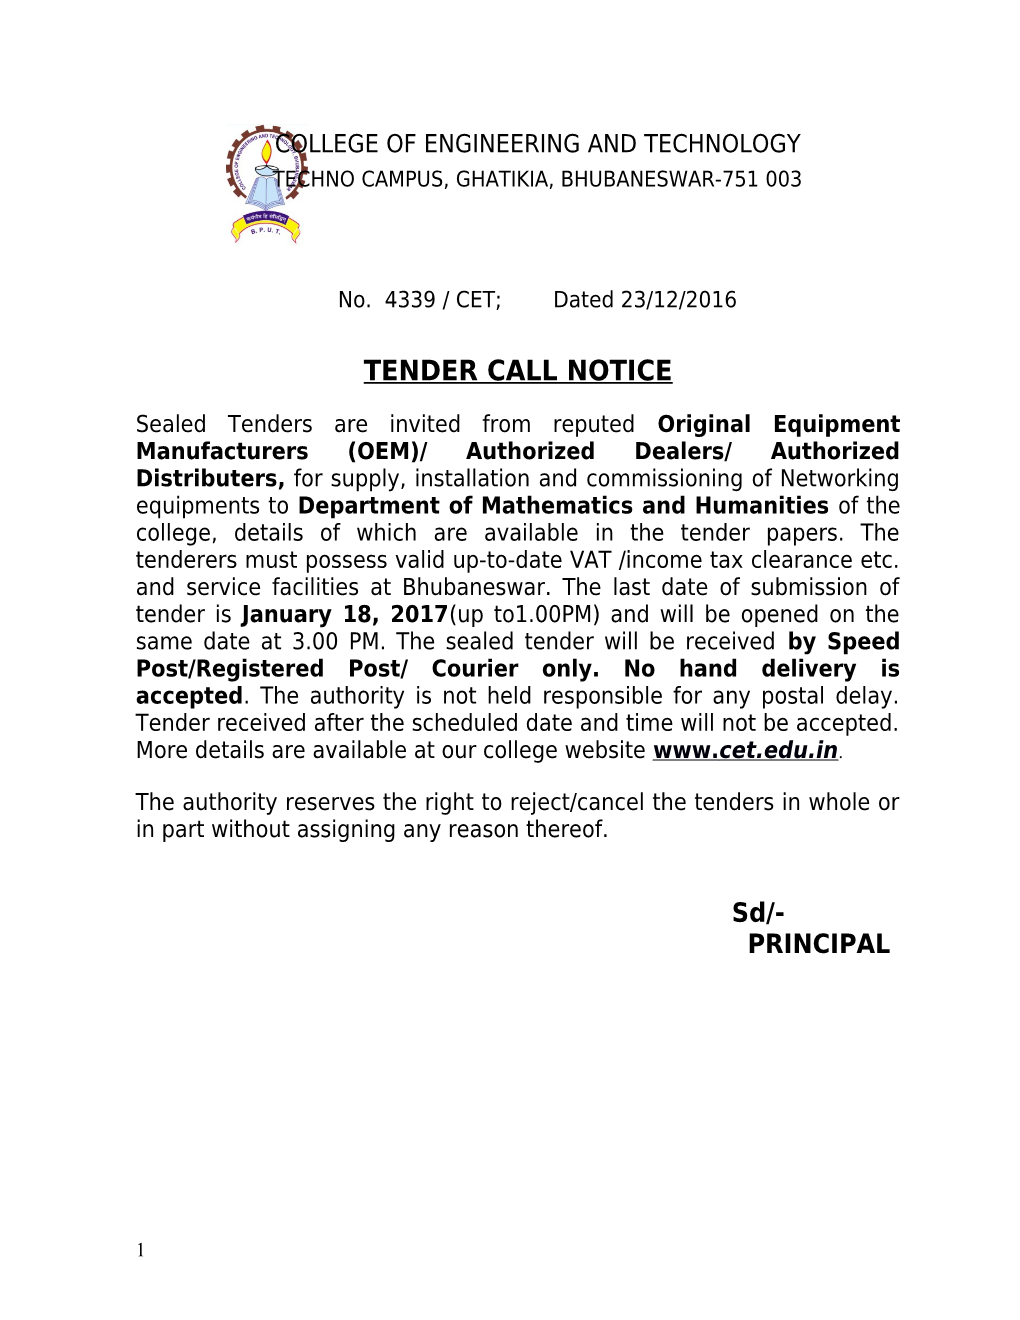 Tender Call Notice s1